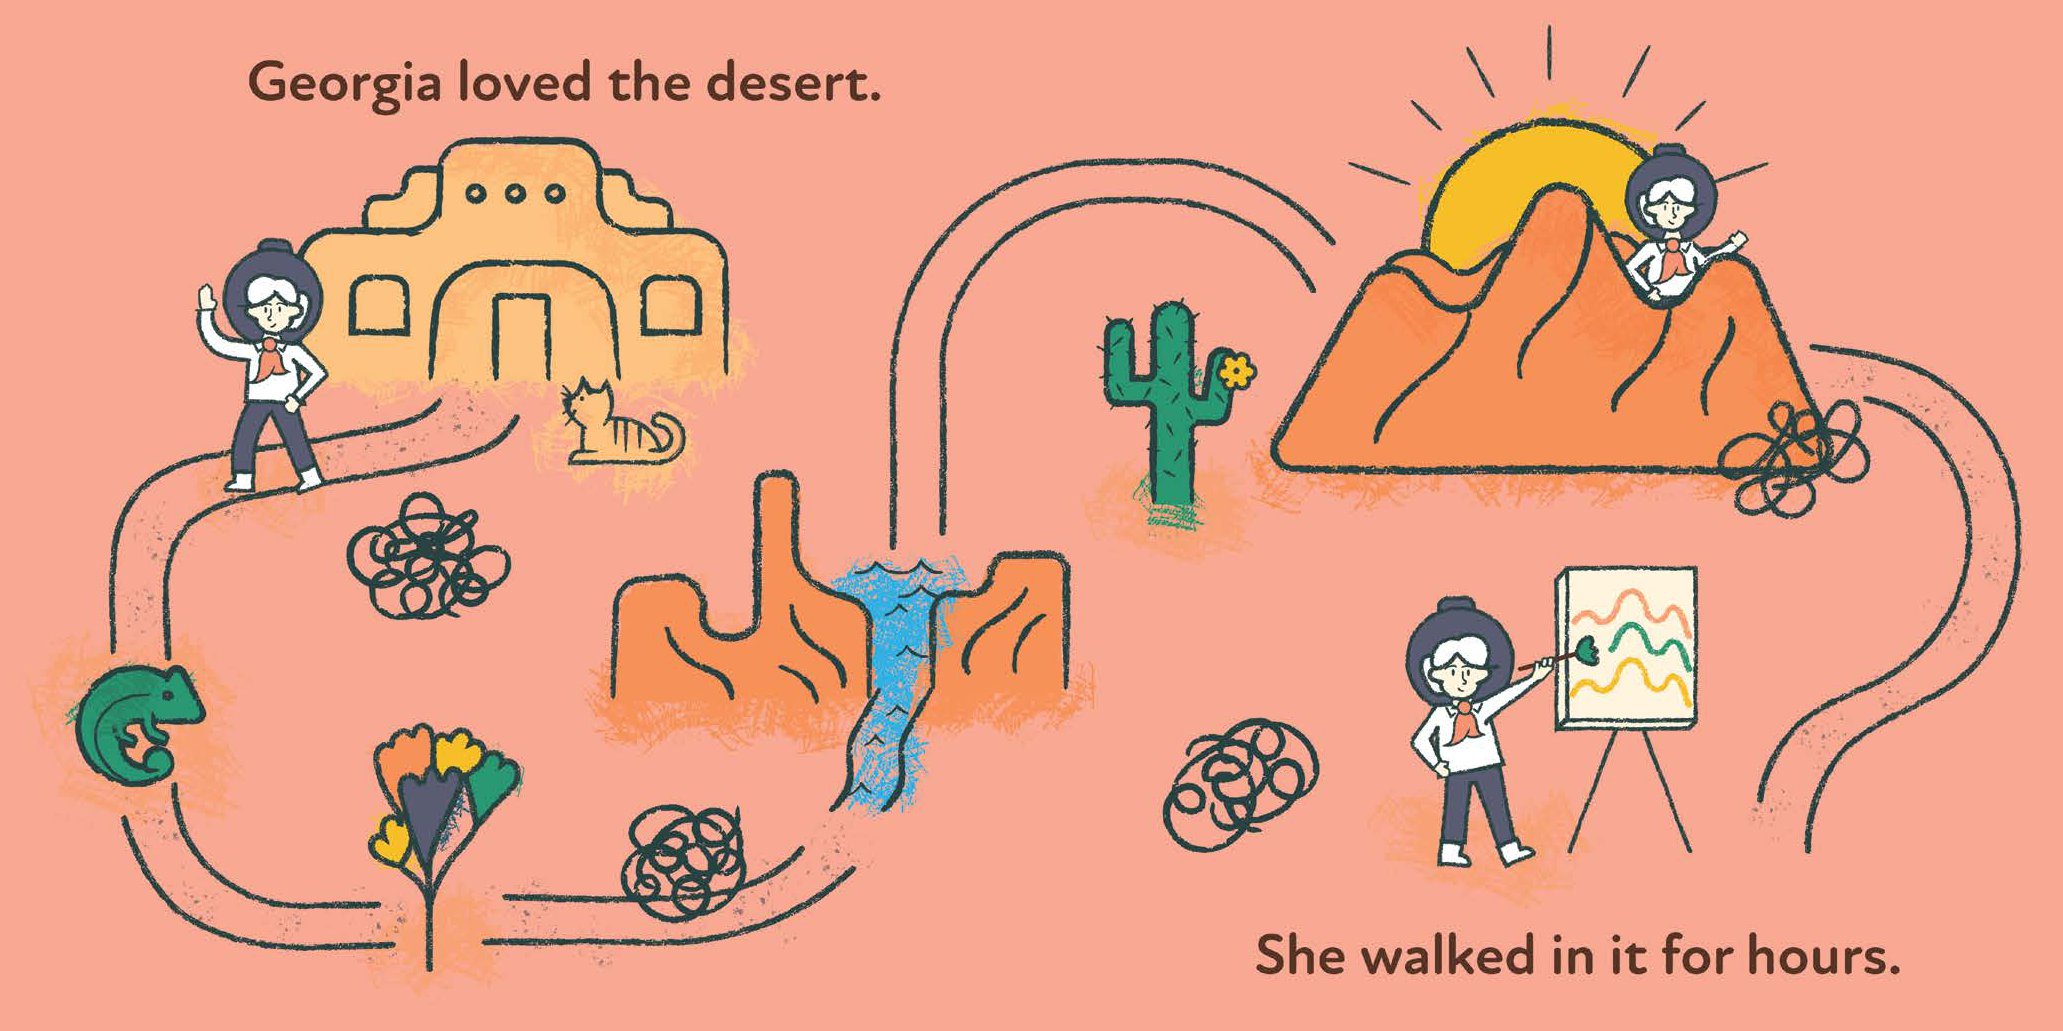 Little Naturalists: Georgia O'Keeffe Loved the Desert